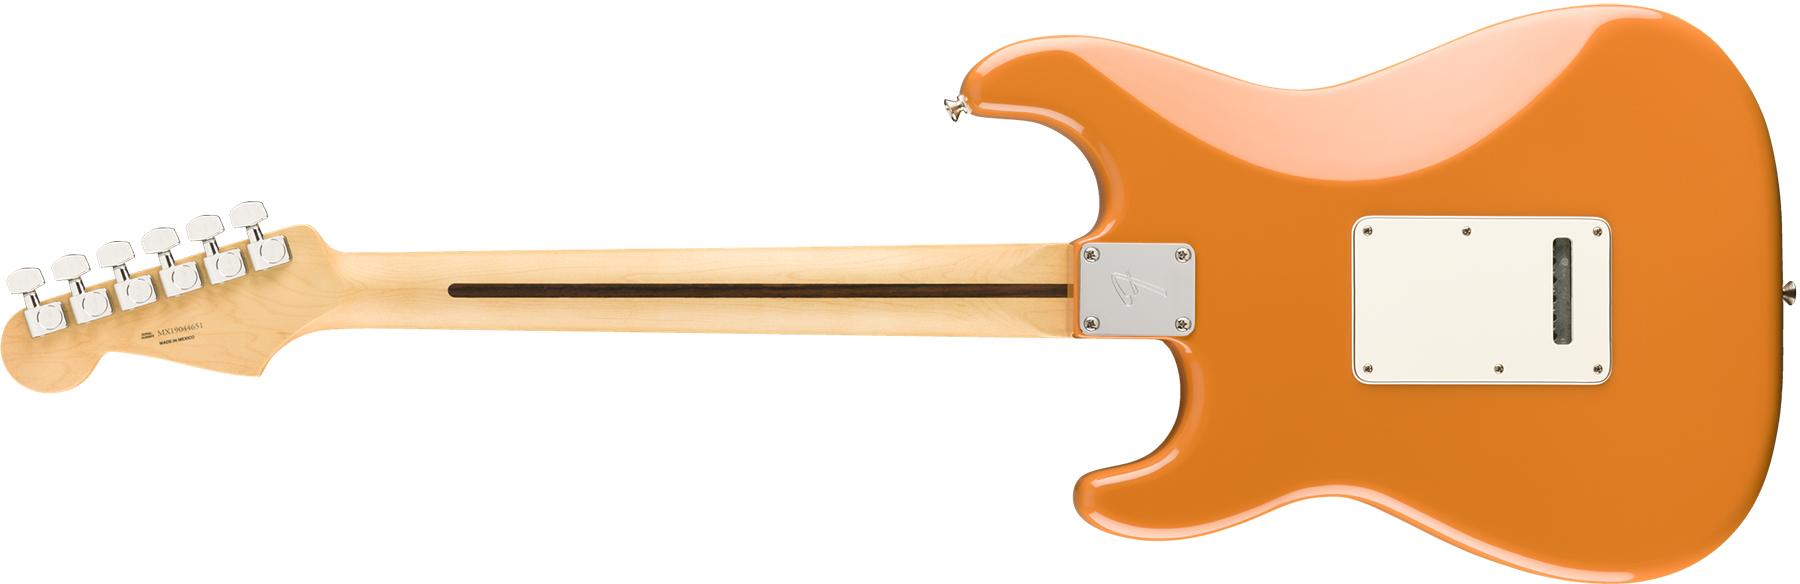 Fender Strat Player Mex Sss Mn - Capri Orange - E-Gitarre in Str-Form - Variation 1